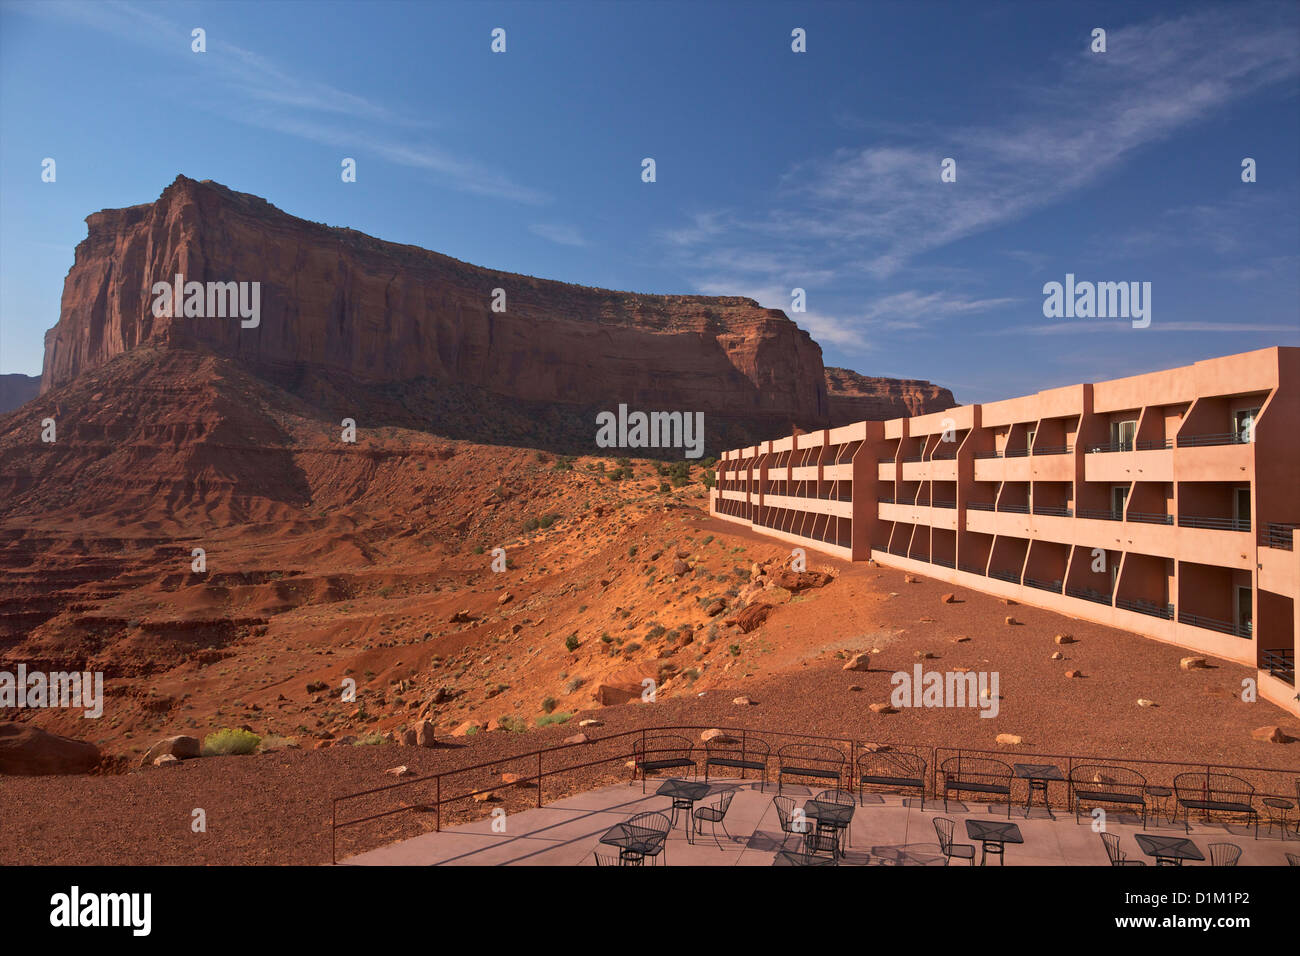 Das View Hotel, Monument Valley Navajo Tribal Park, Utah, USA Stockfoto